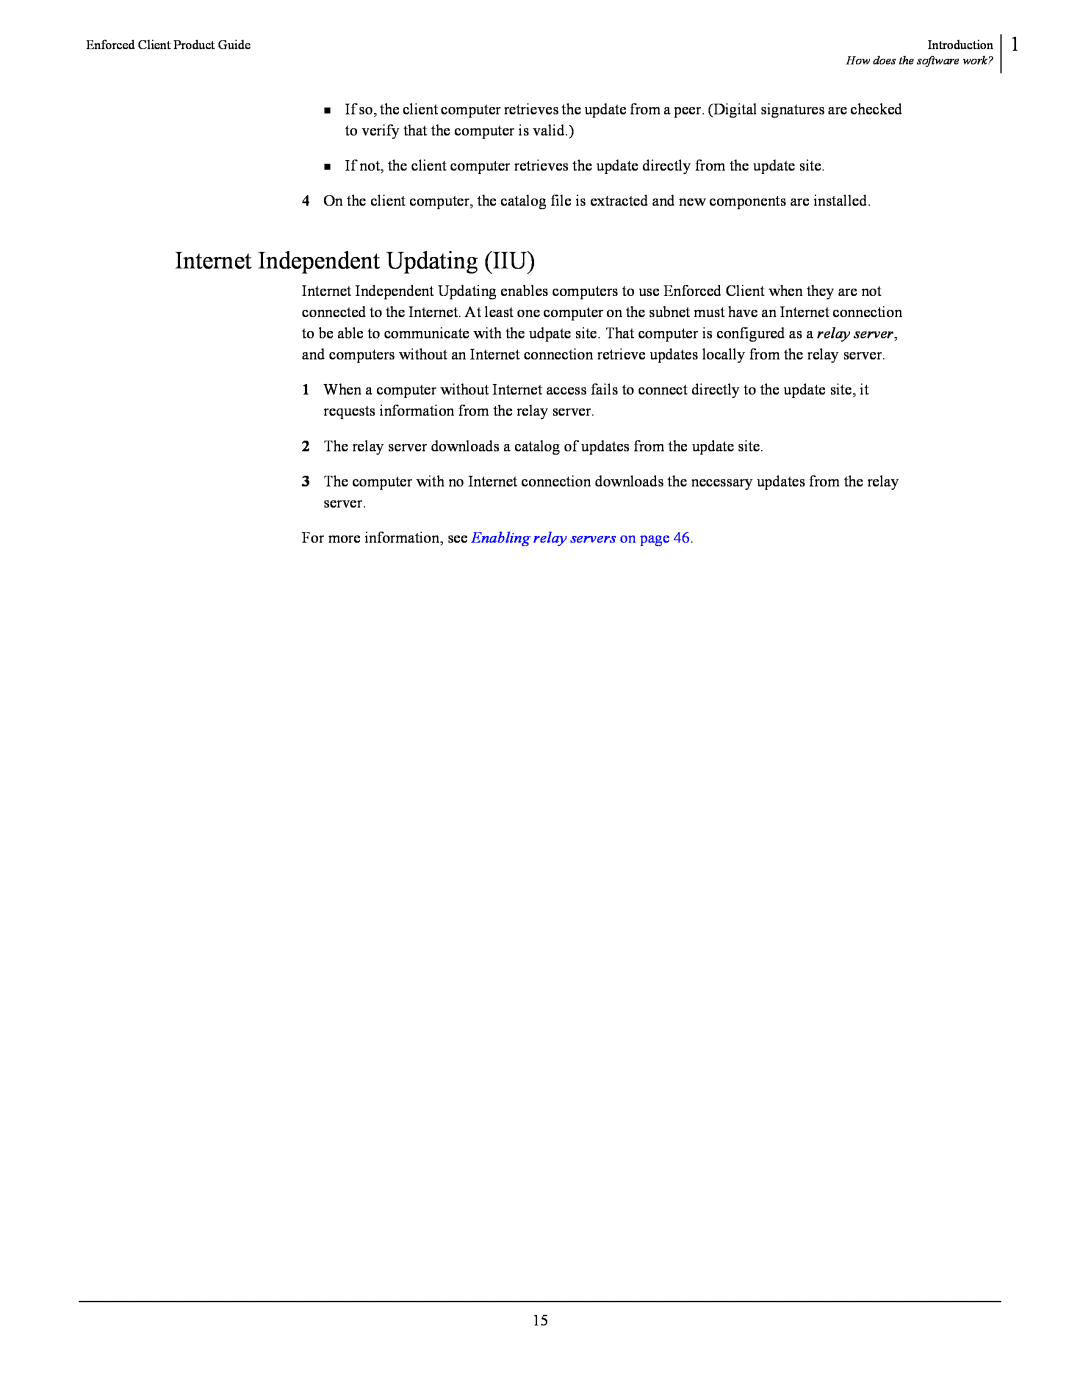 SonicWALL 4.5 manual Internet Independent Updating IIU 